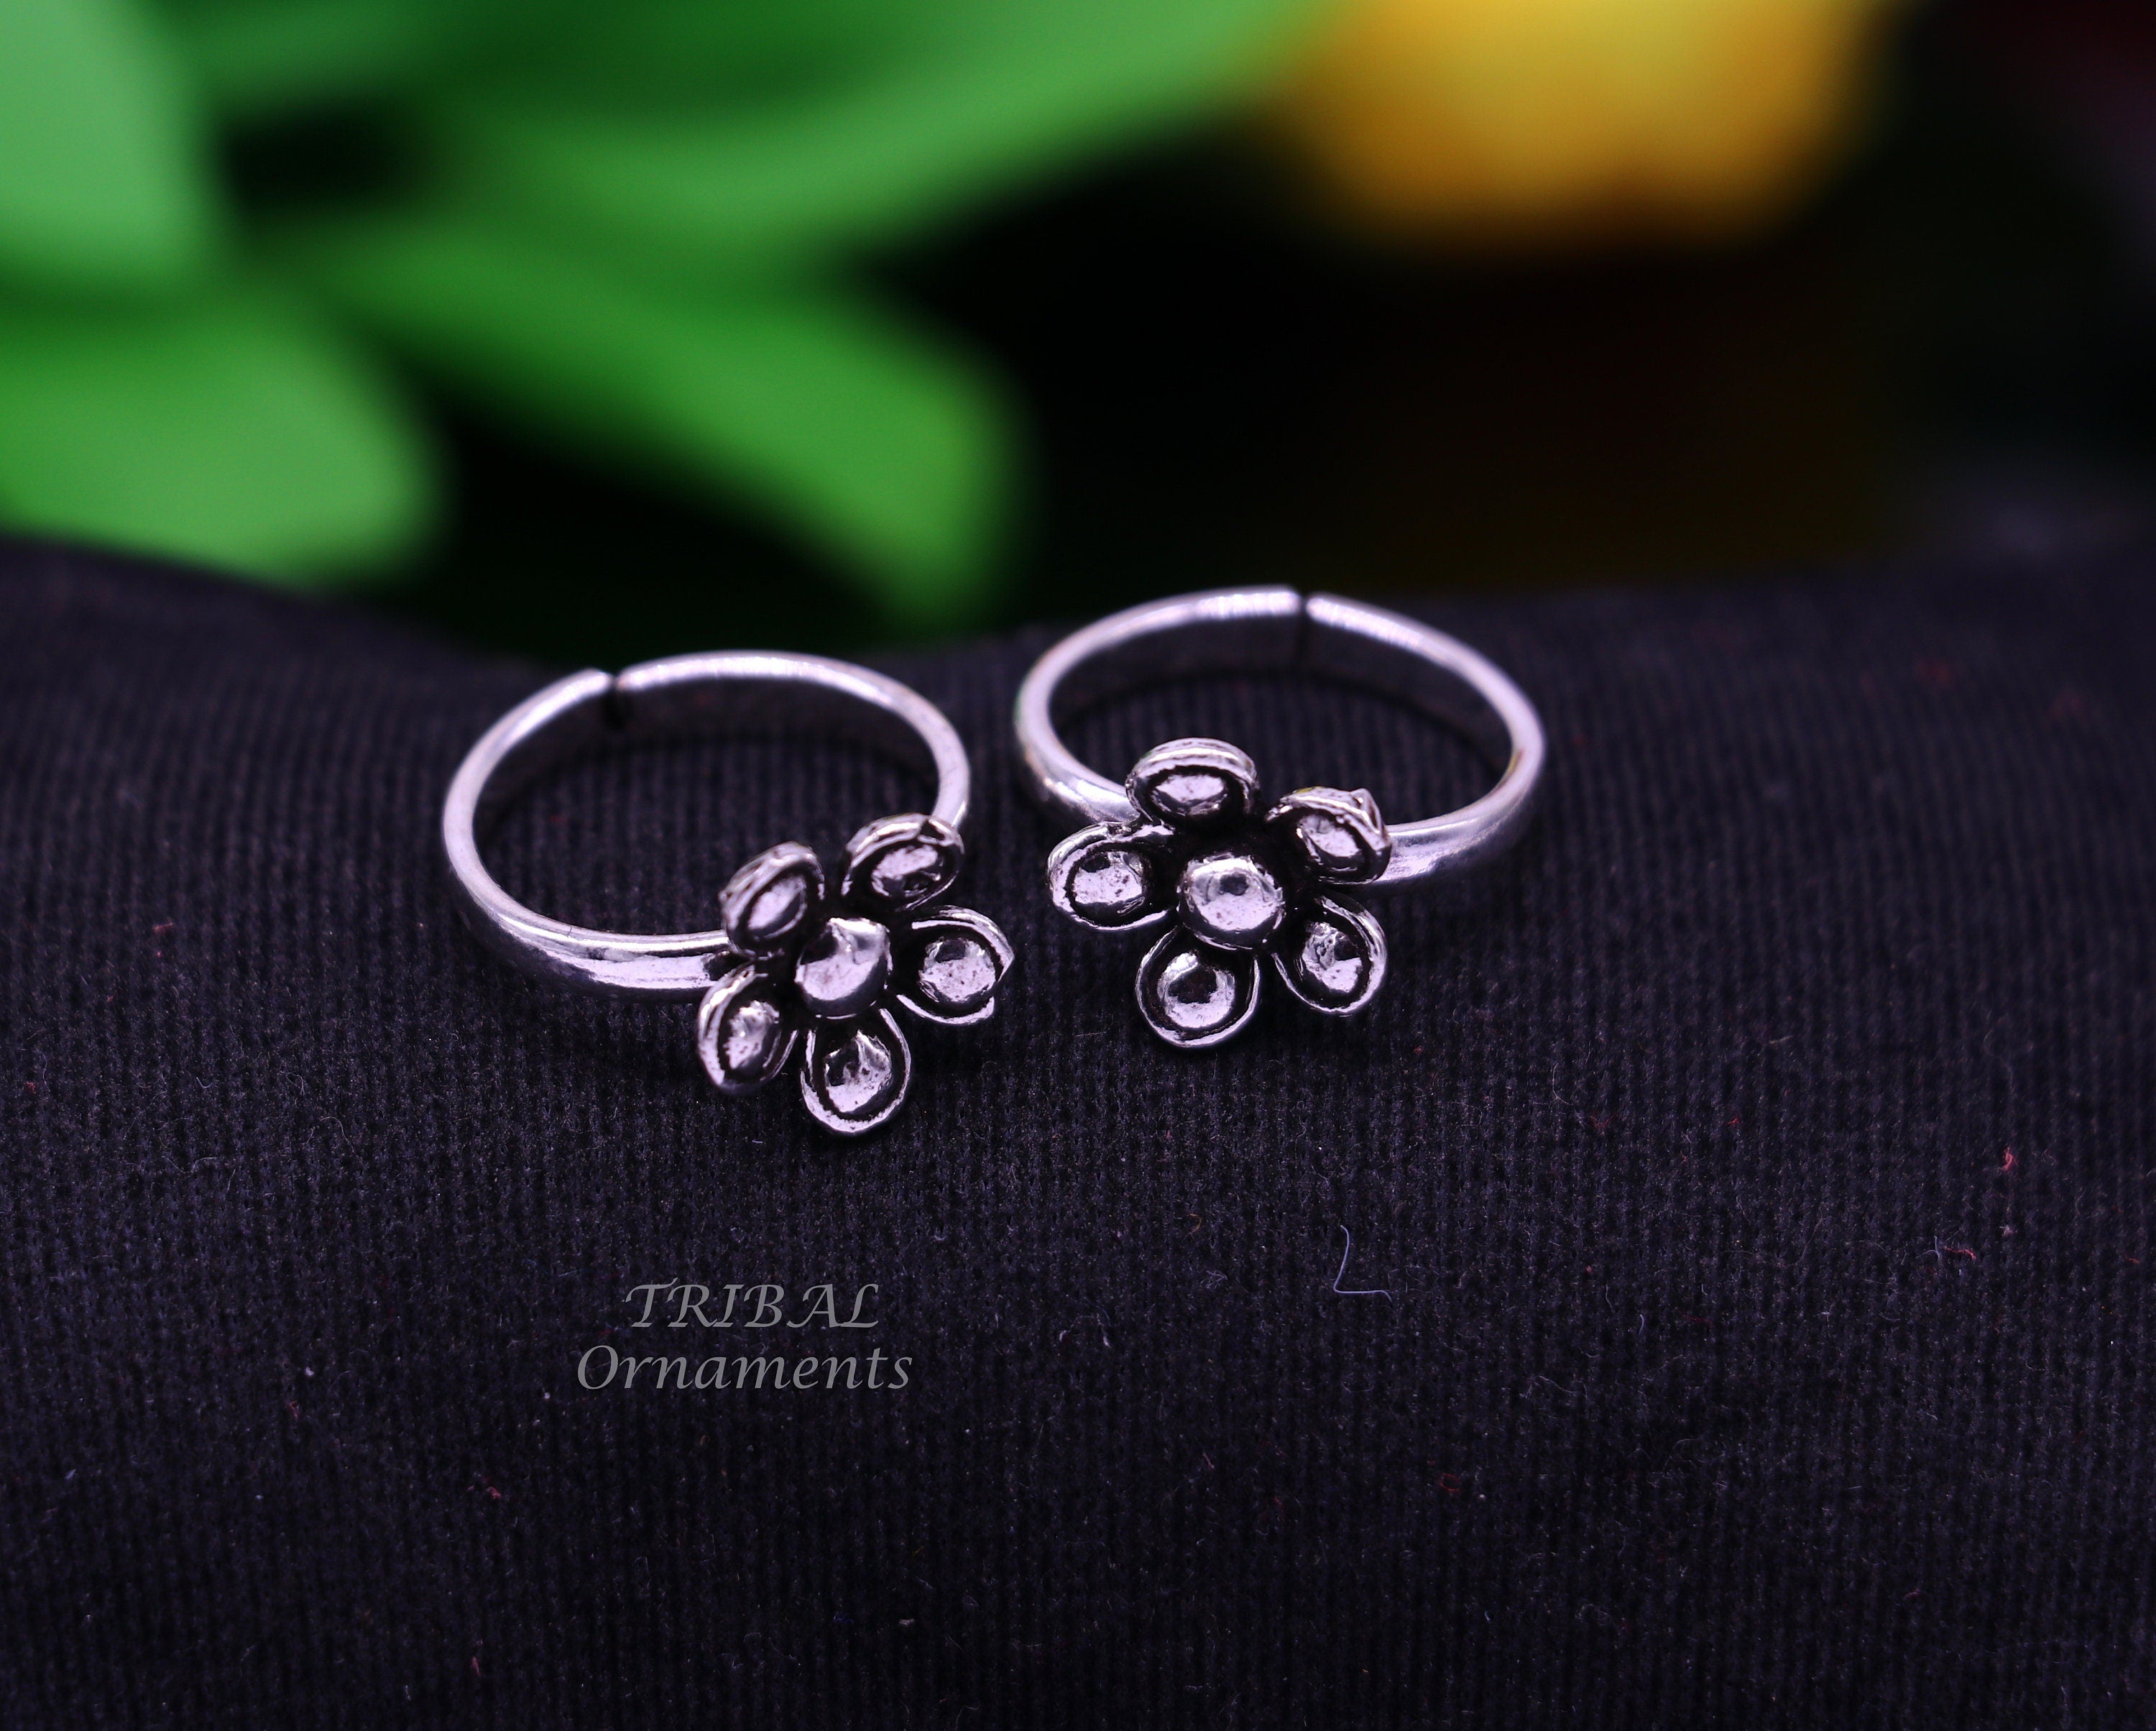 Buy Praavy 925 Oxidised Silver Four Flower Adjustable Toe Ring Online